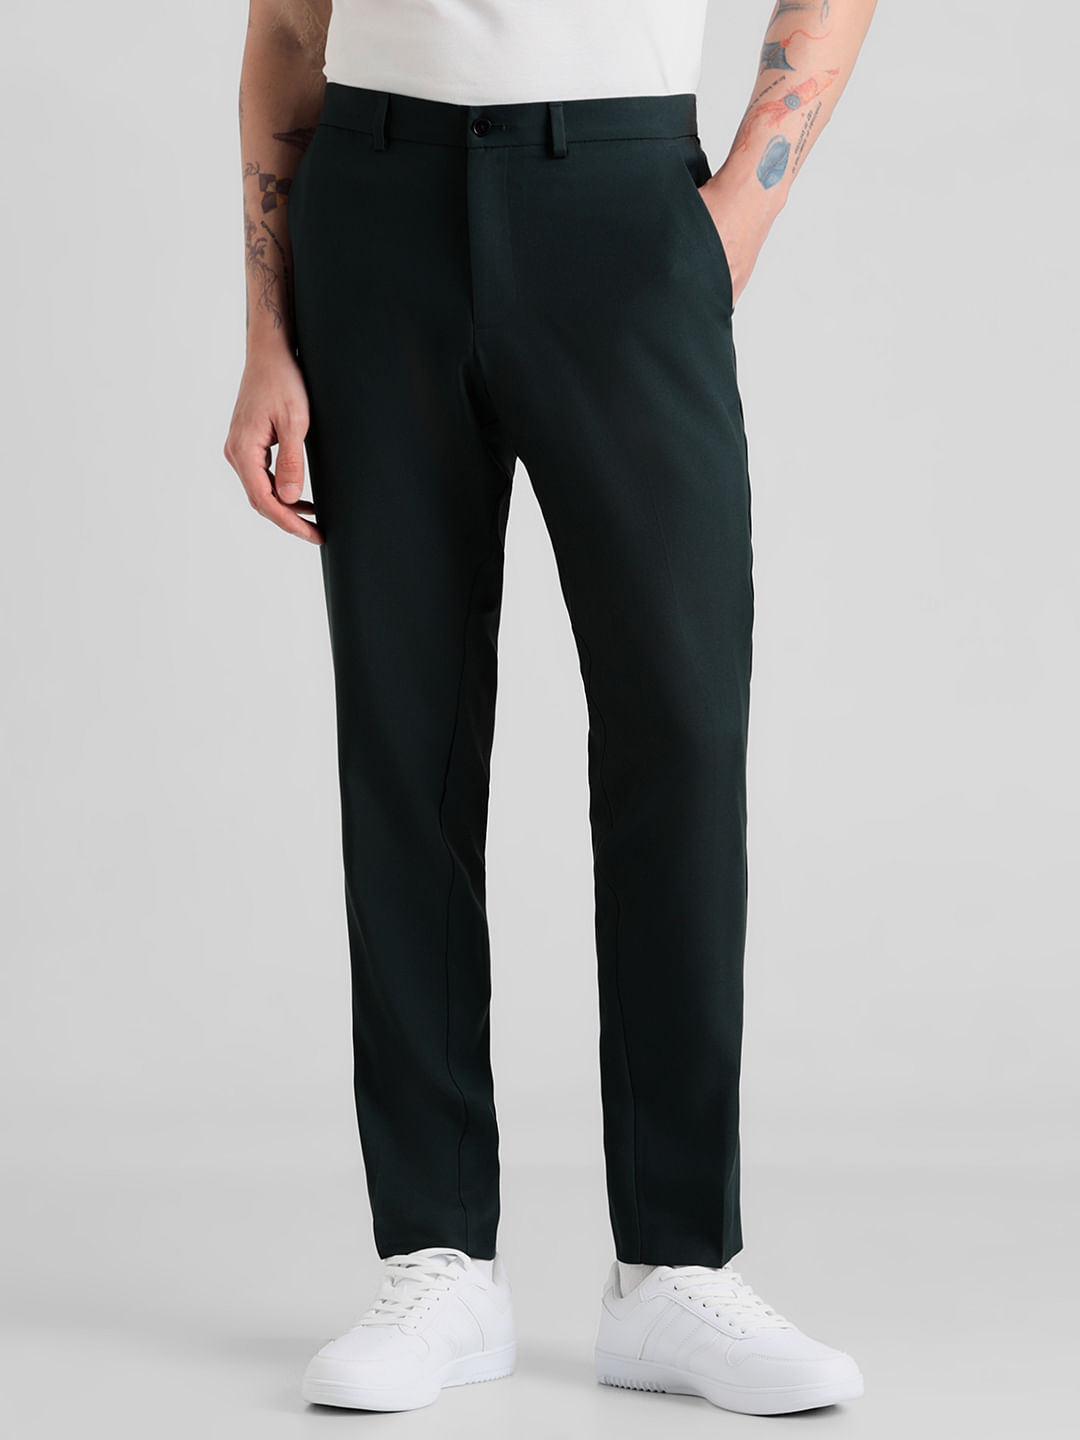 Wide twill trousers - Black - Ladies | H&M